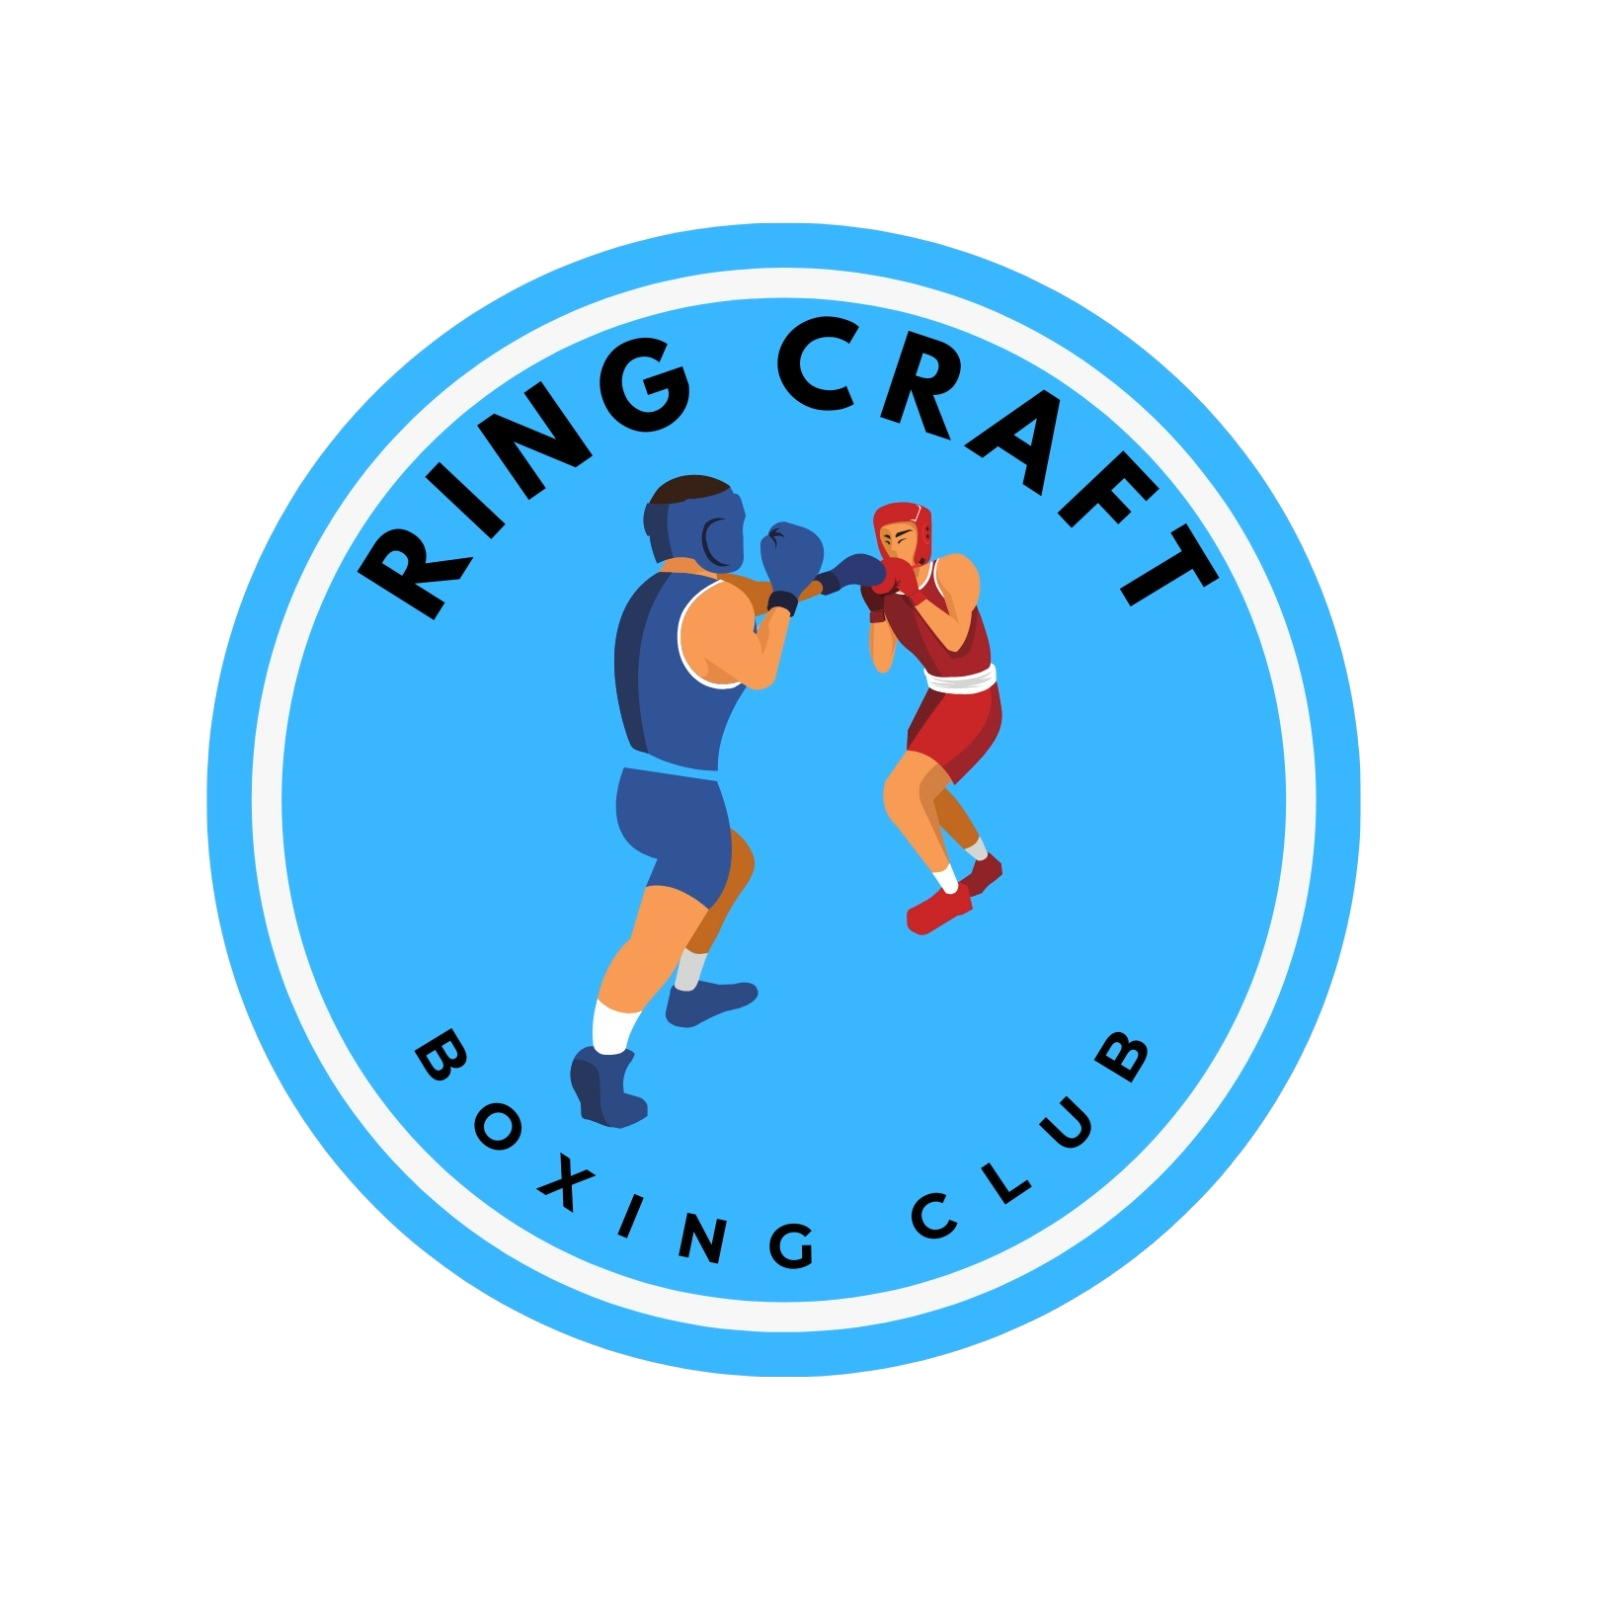 Ring Craft Boxing Club